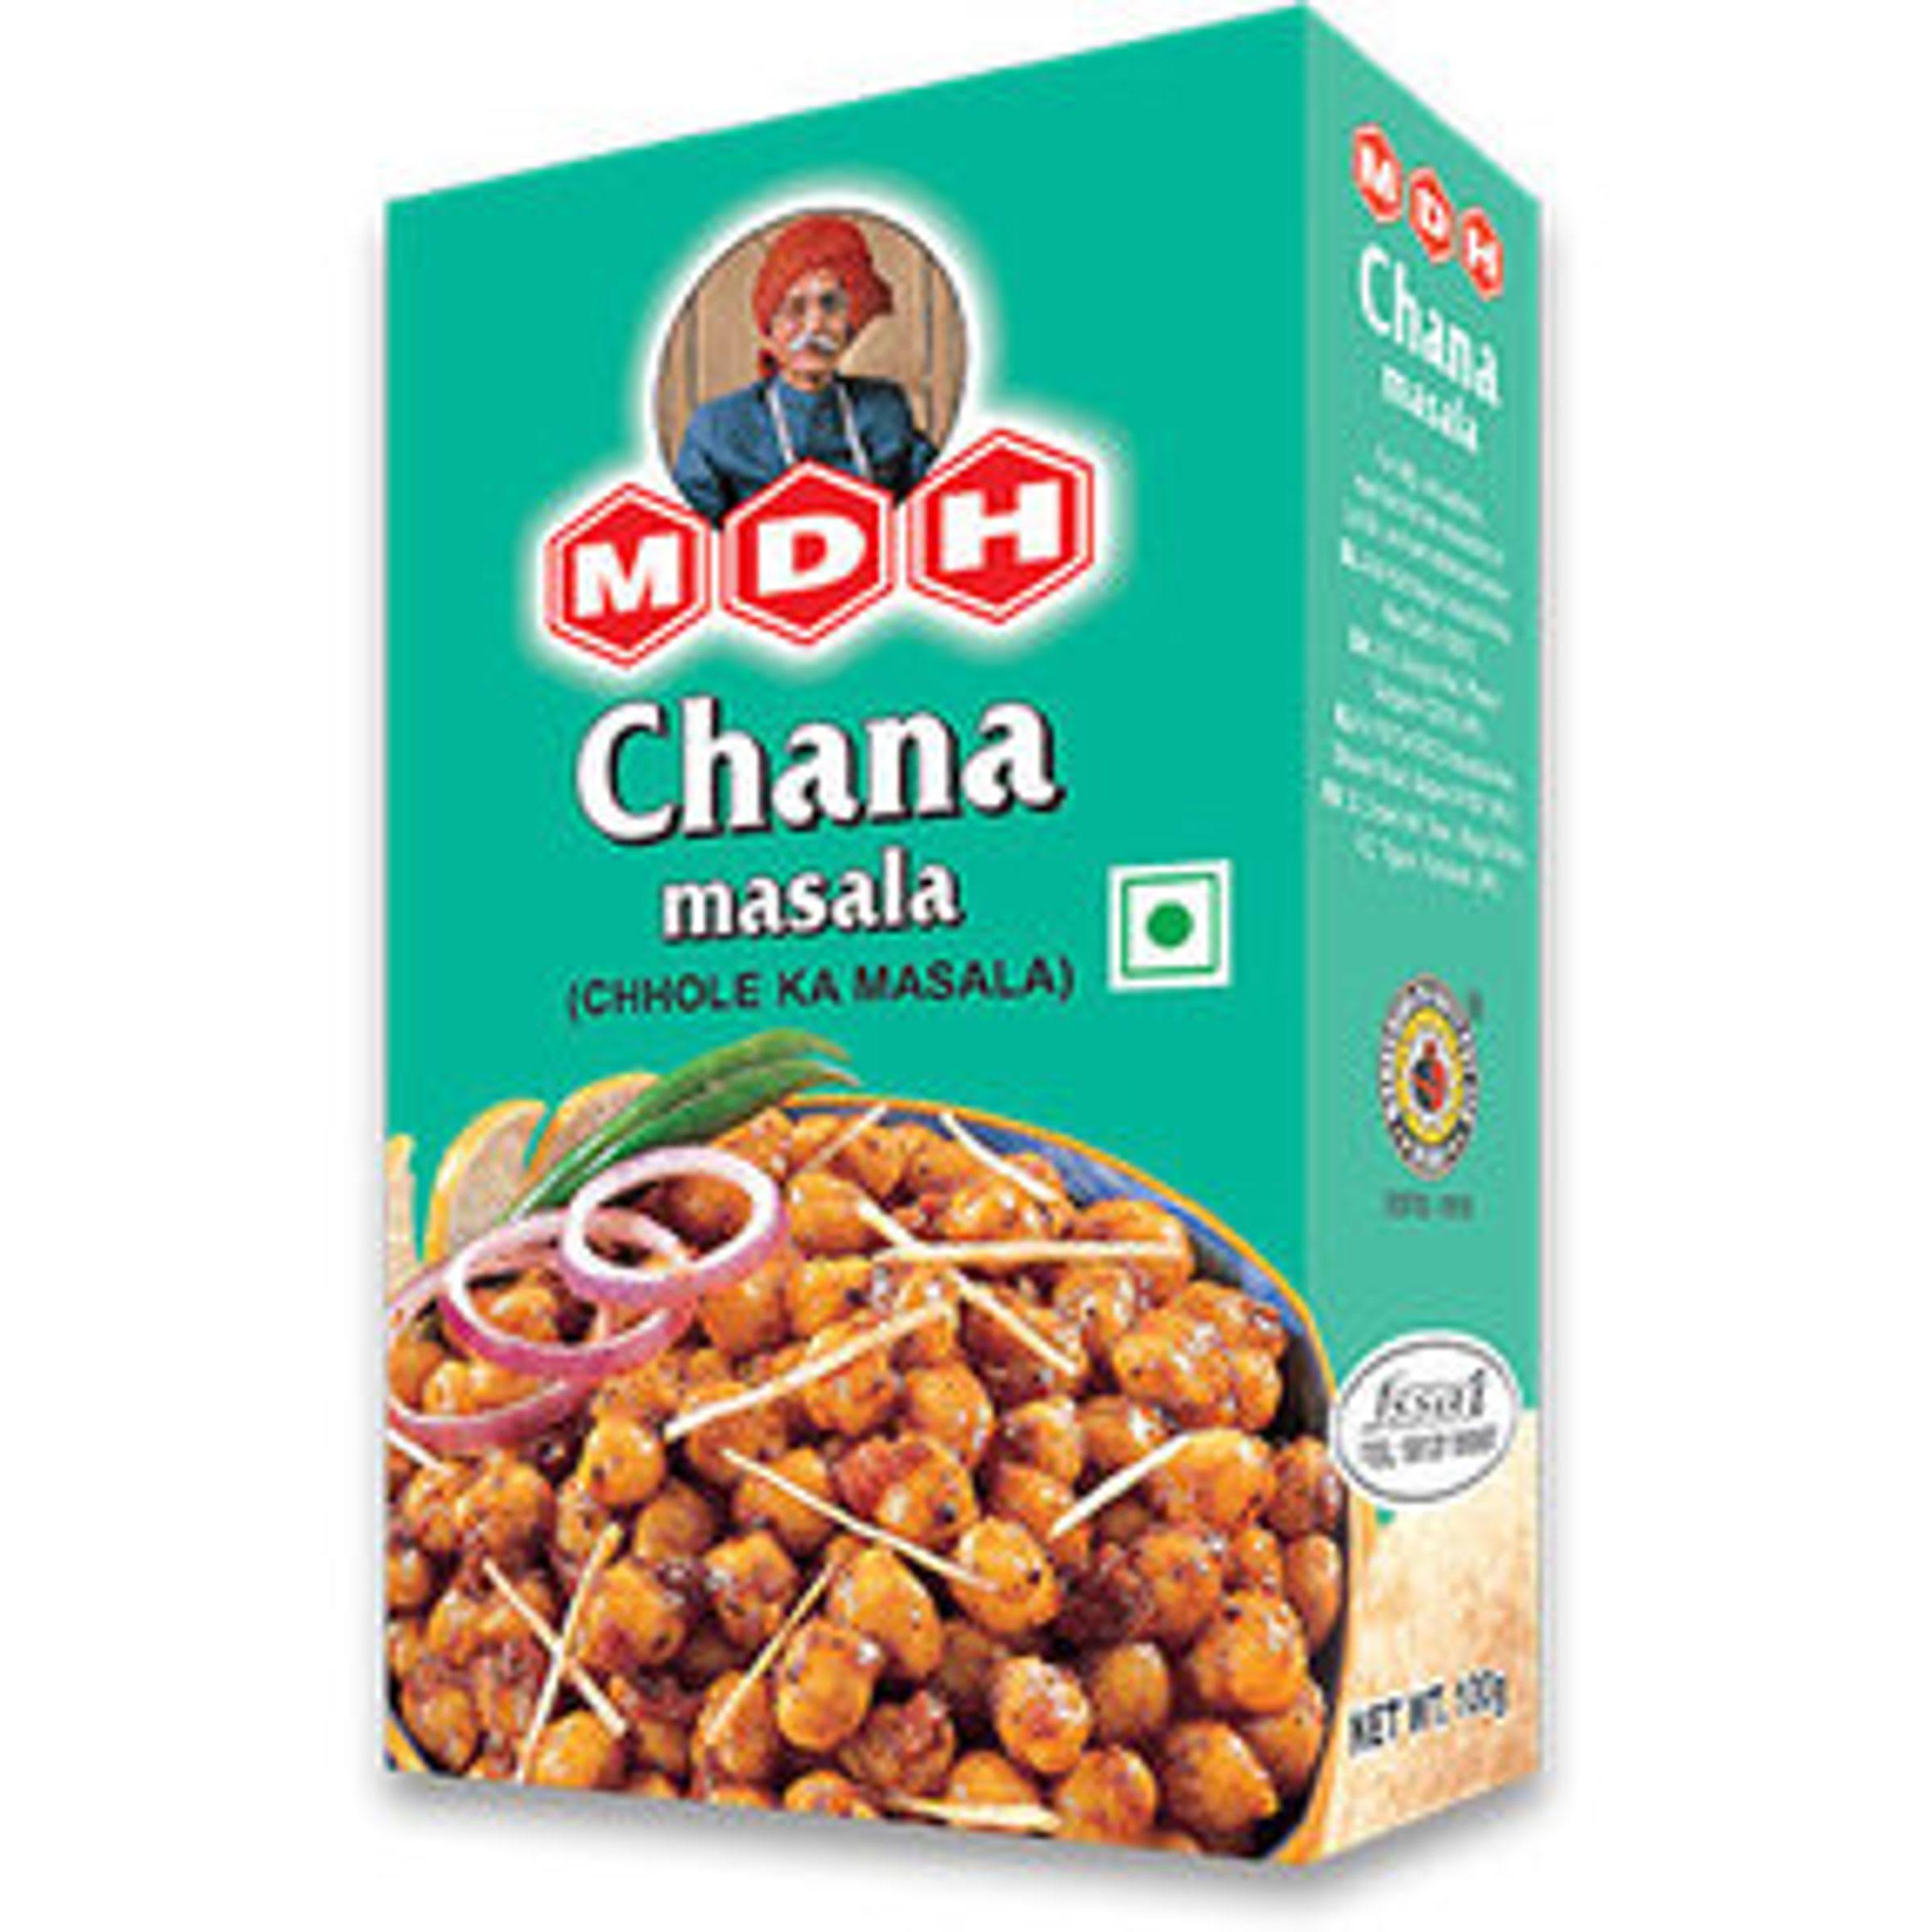 MDH Chana Masala Spice Blend - 100g